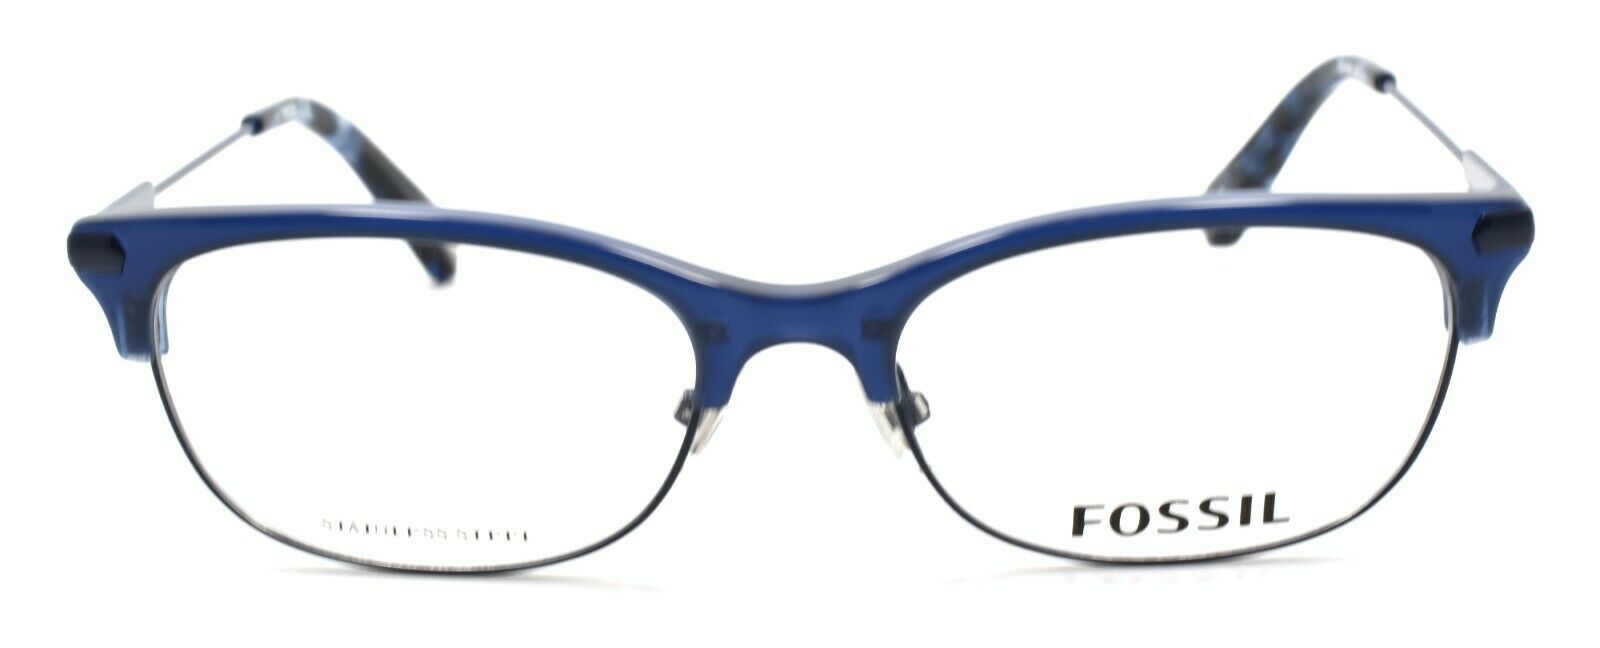 2-Fossil FOS 6055 OIO Women's Eyeglasses Frames 52-17-145 Blue + CASE-762753440662-IKSpecs